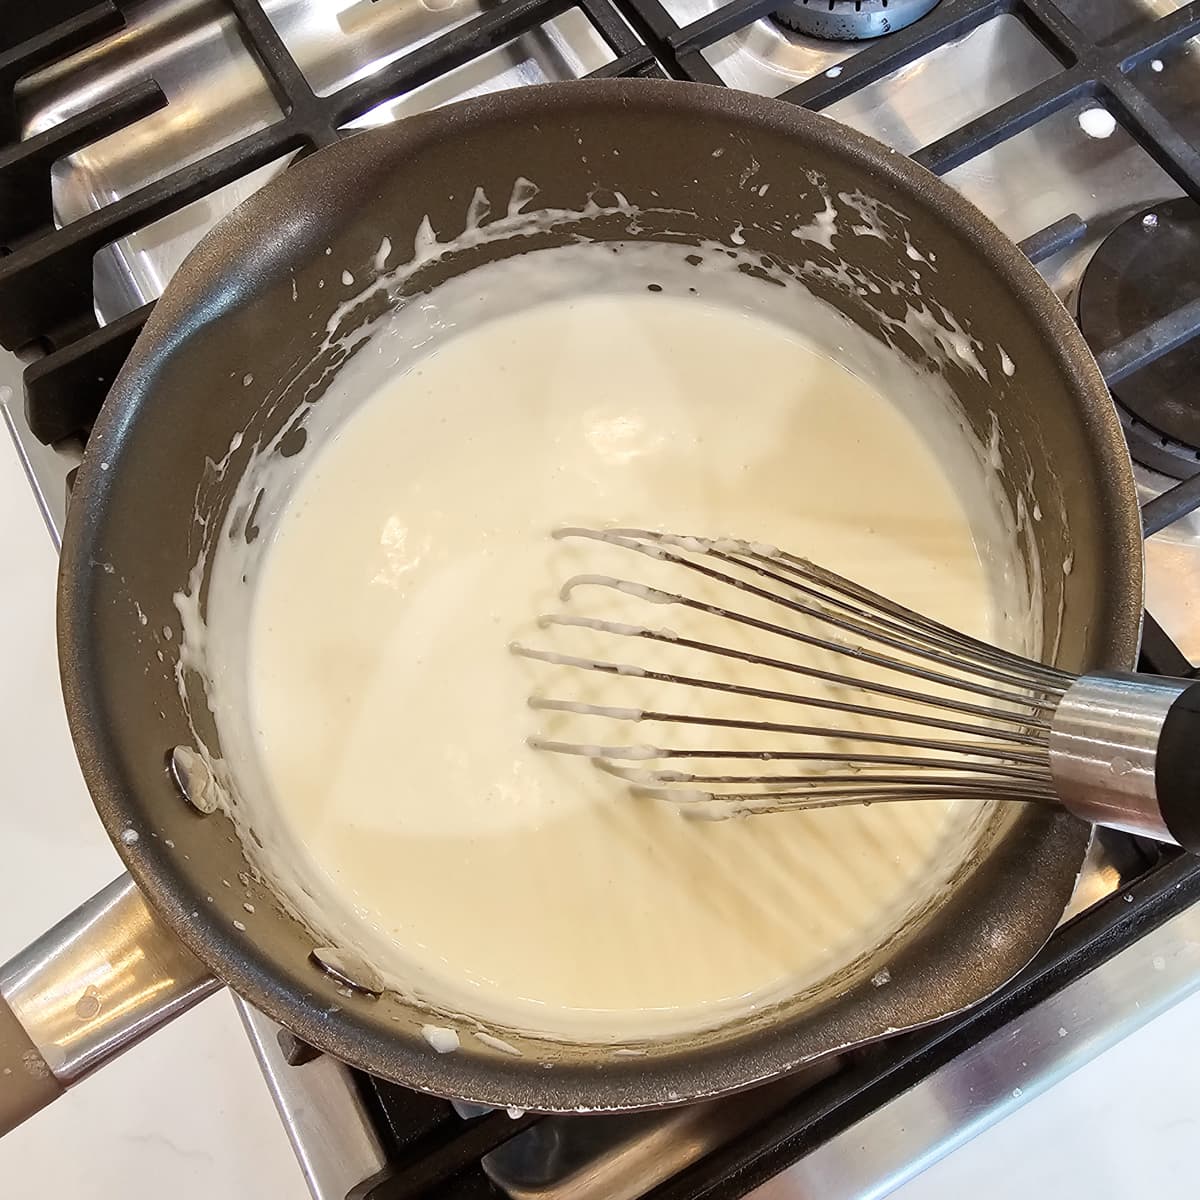 Making homemade bechamel in a sauce pan.